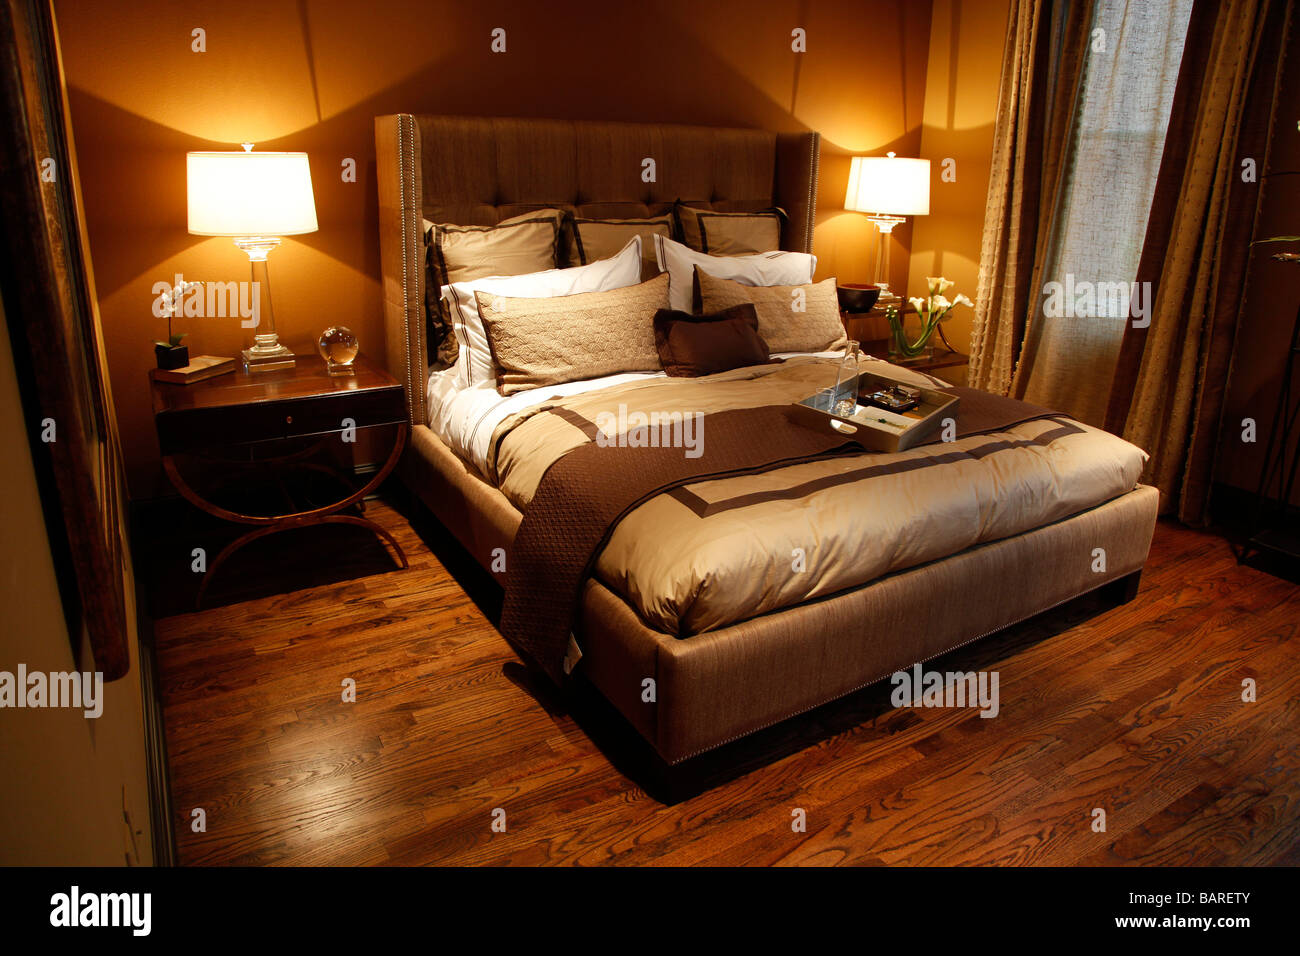 Model home bedroom in modern home Stock Photo